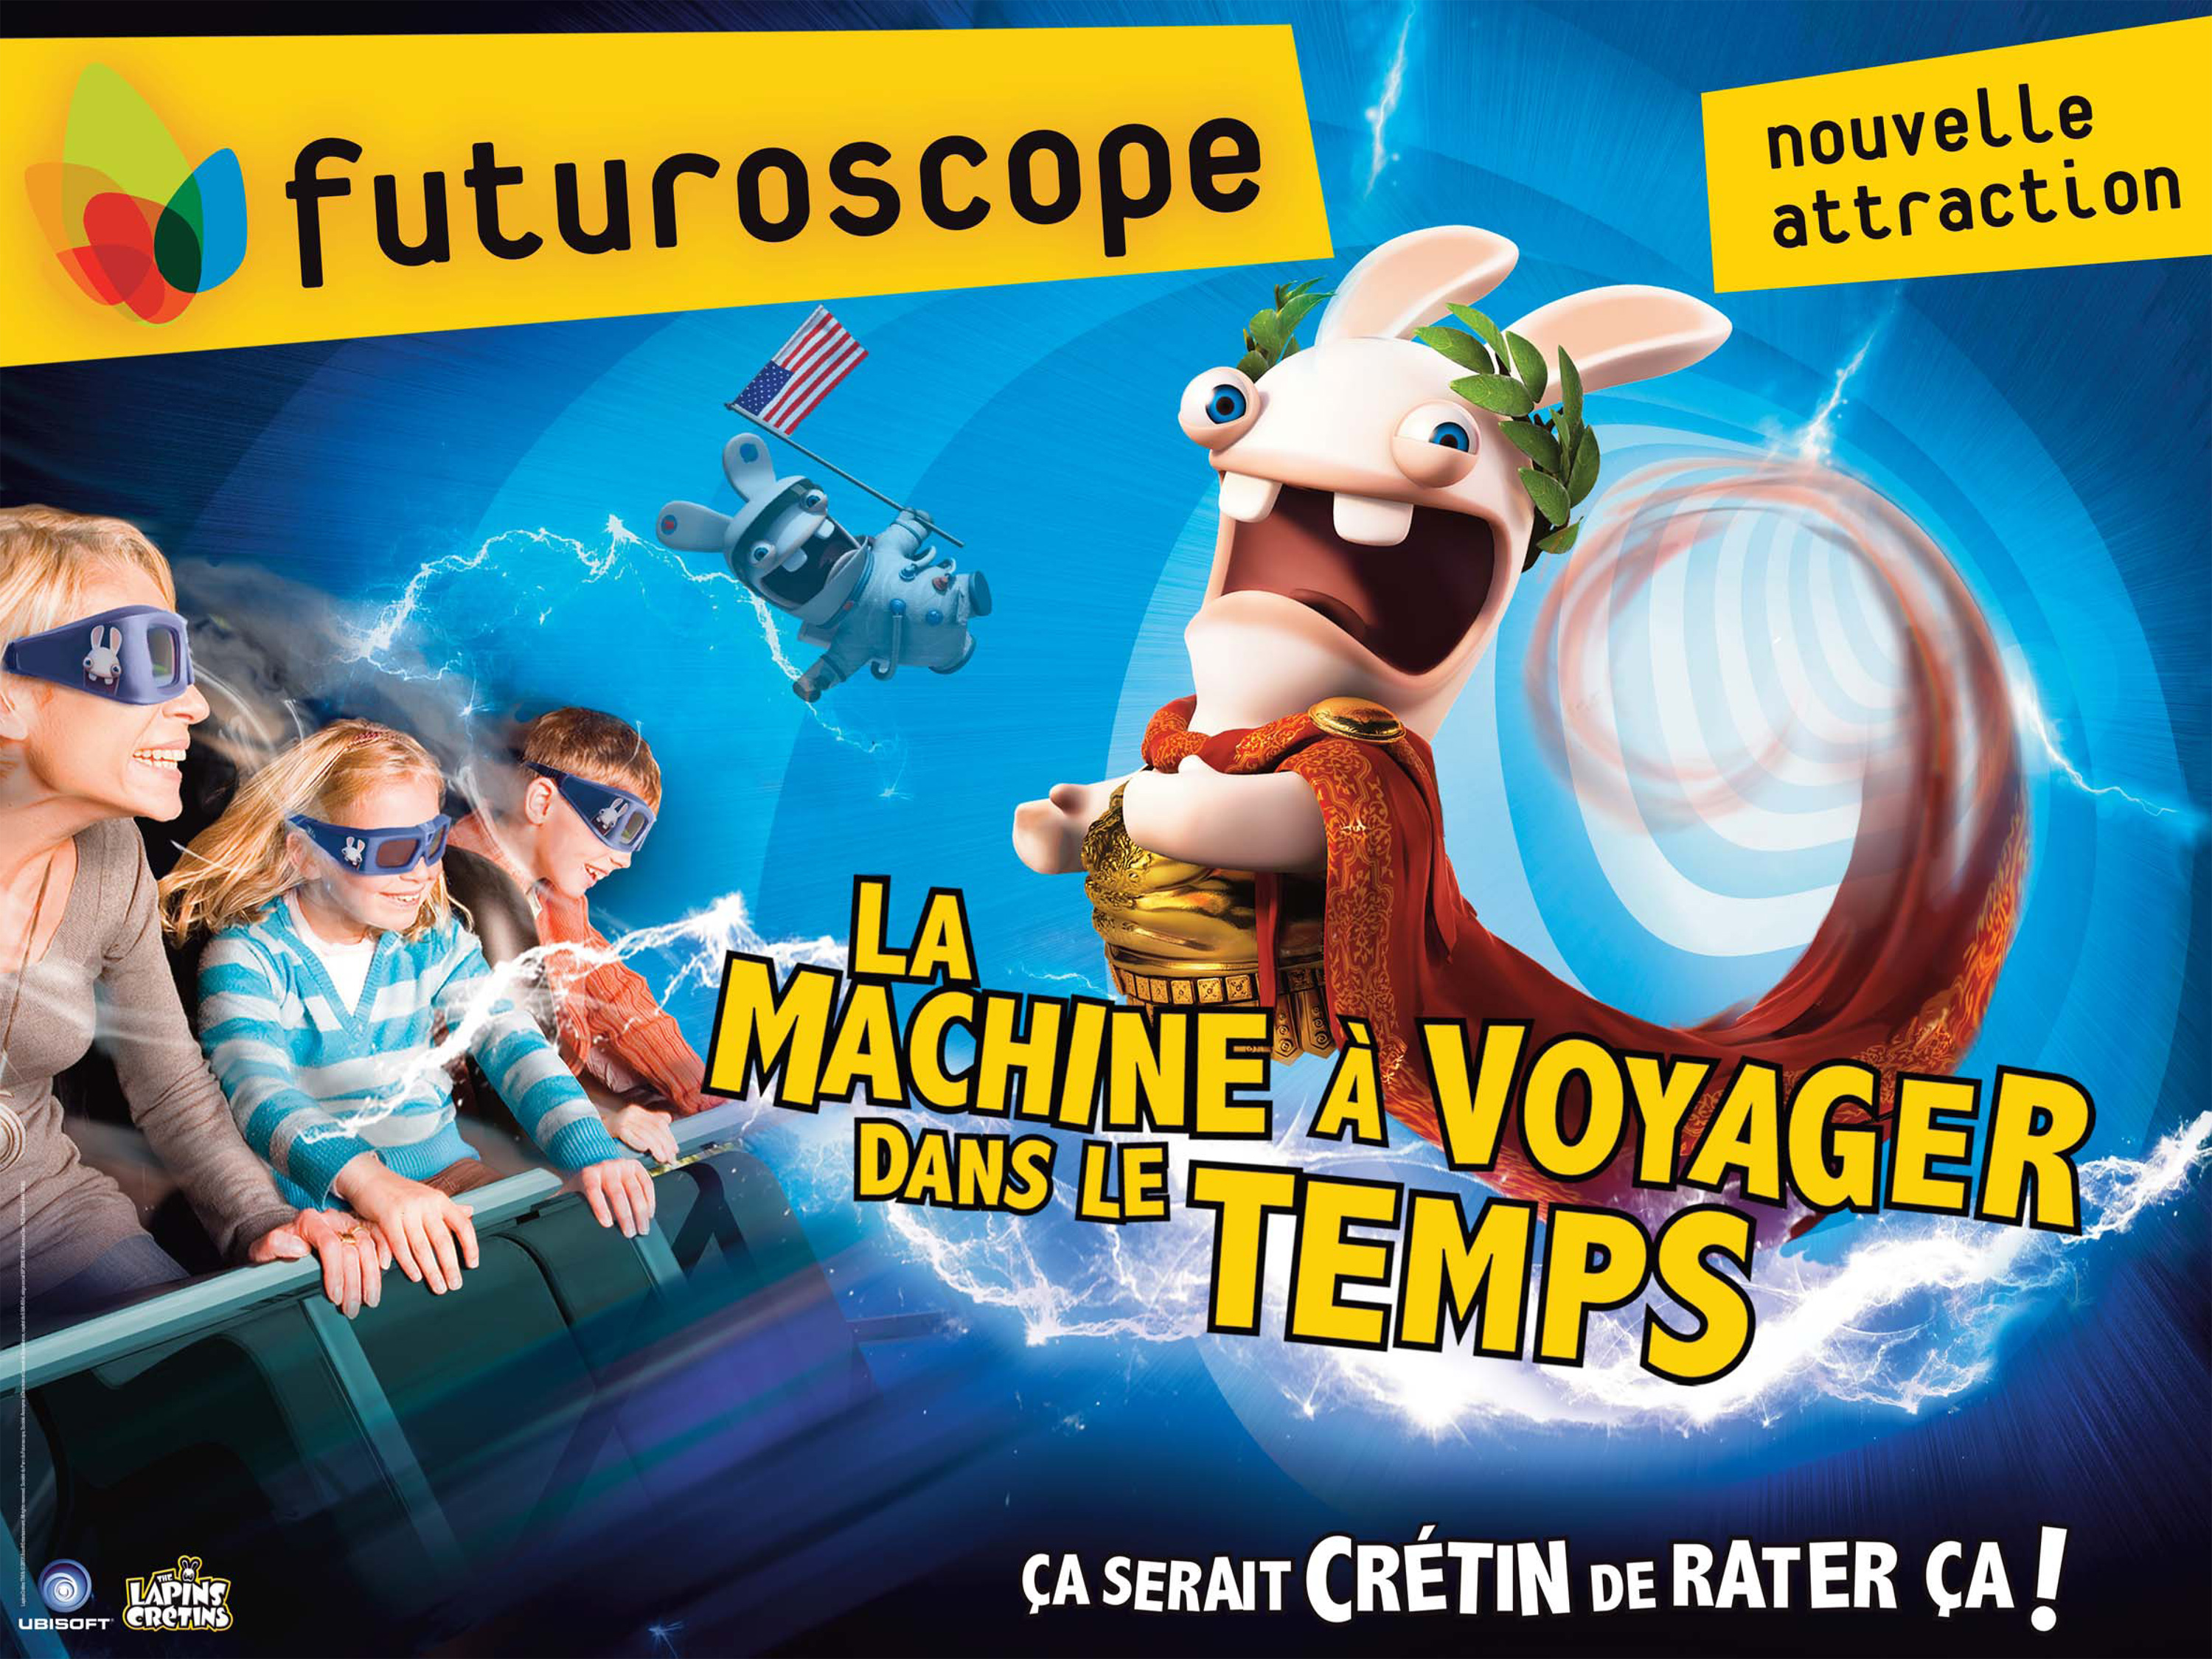 lapins-cretins-futuroscope-poitiers-attraction.jpg